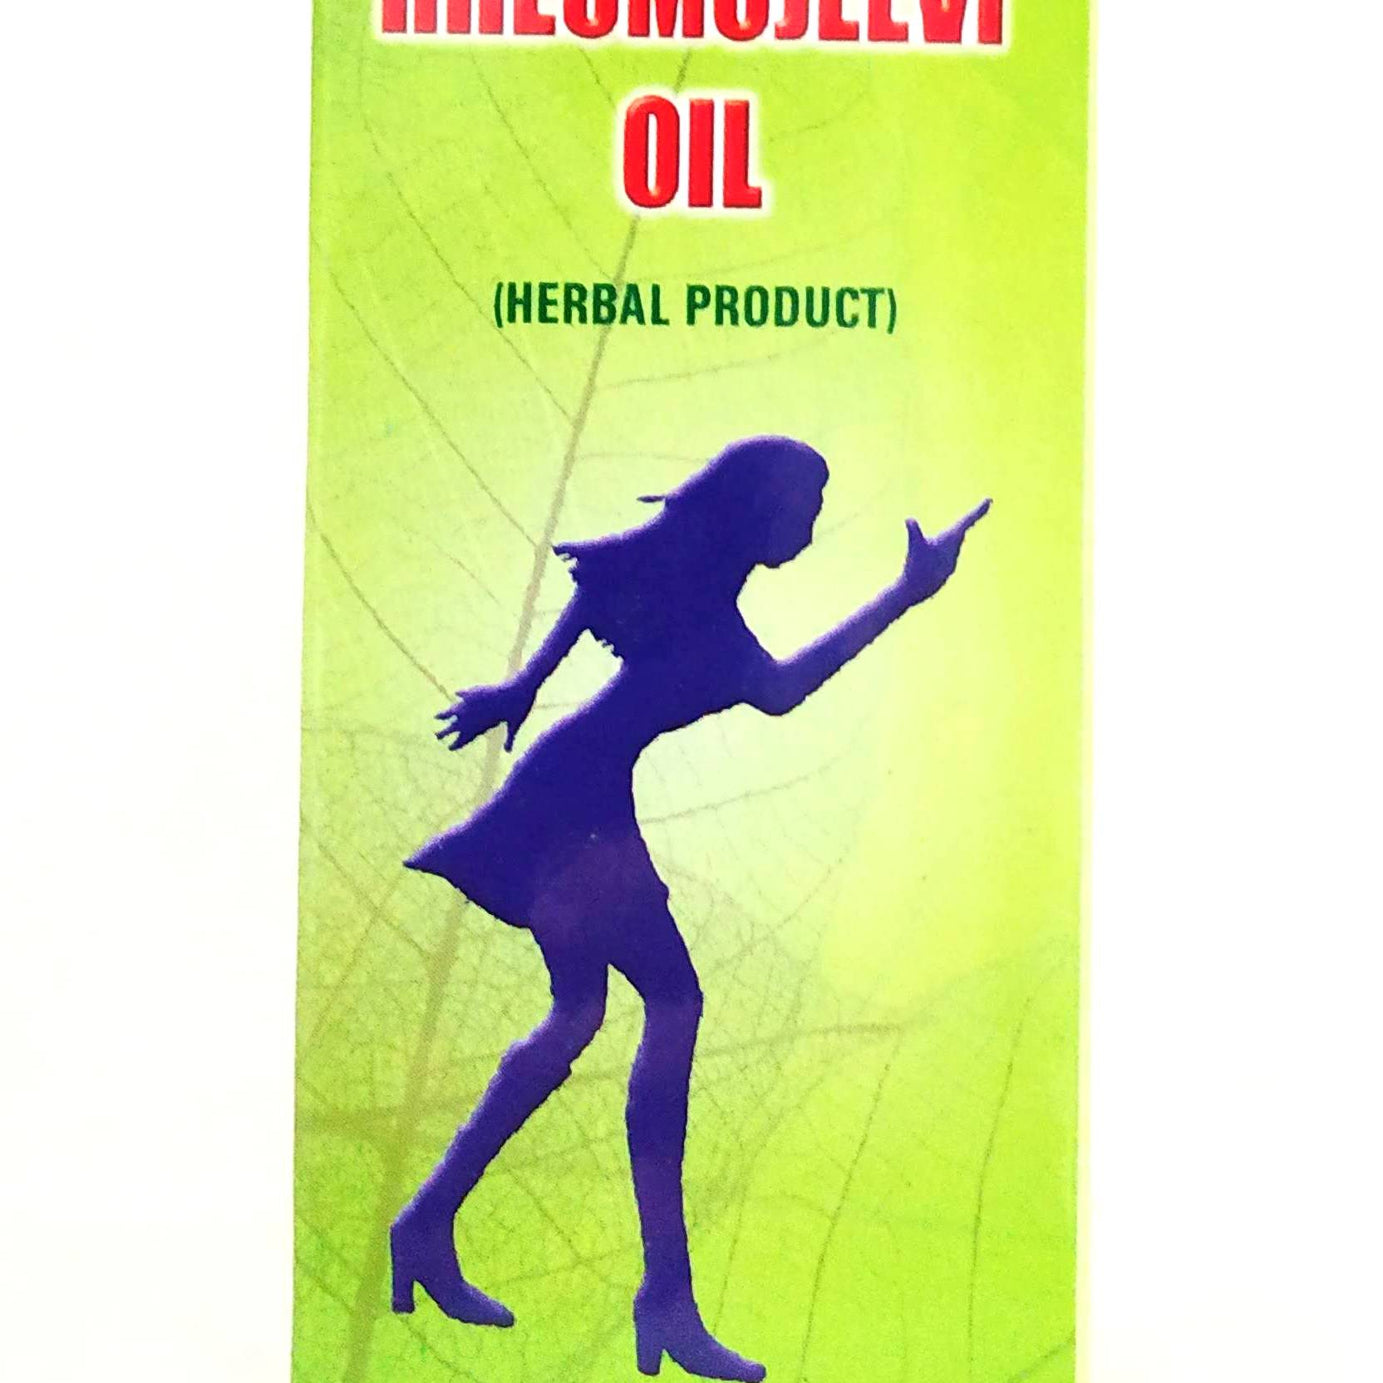 Shop Rheumojeevi oil 100ml at price 185.00 from Sanjeevi Online - Ayush Care